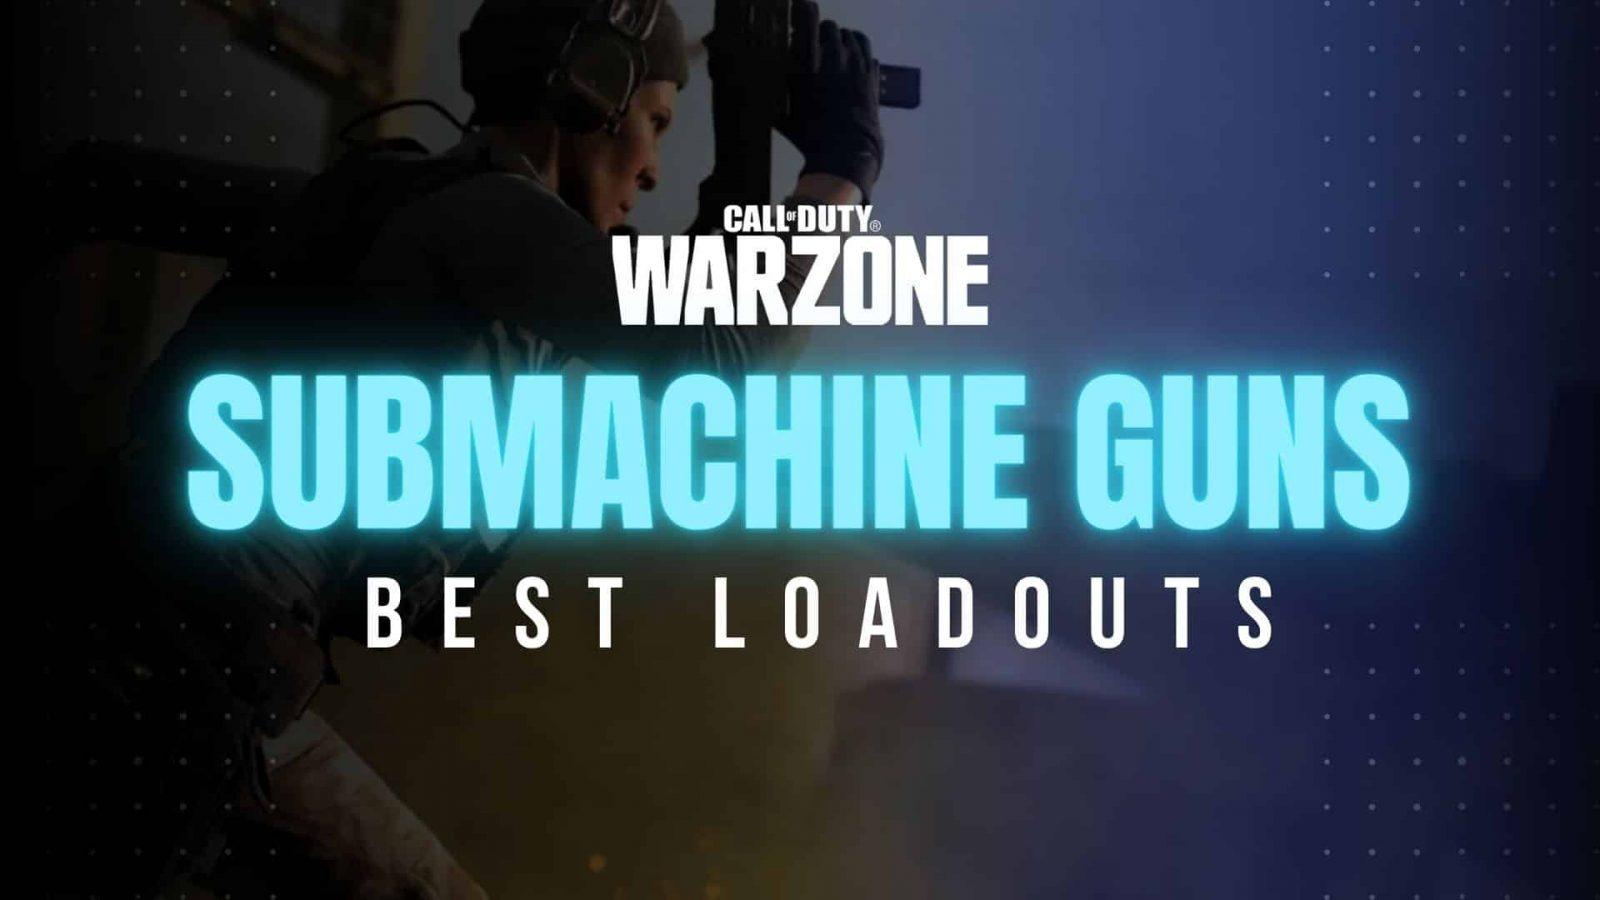 Warzone 2.0: The best current meta weapons - Jaxon